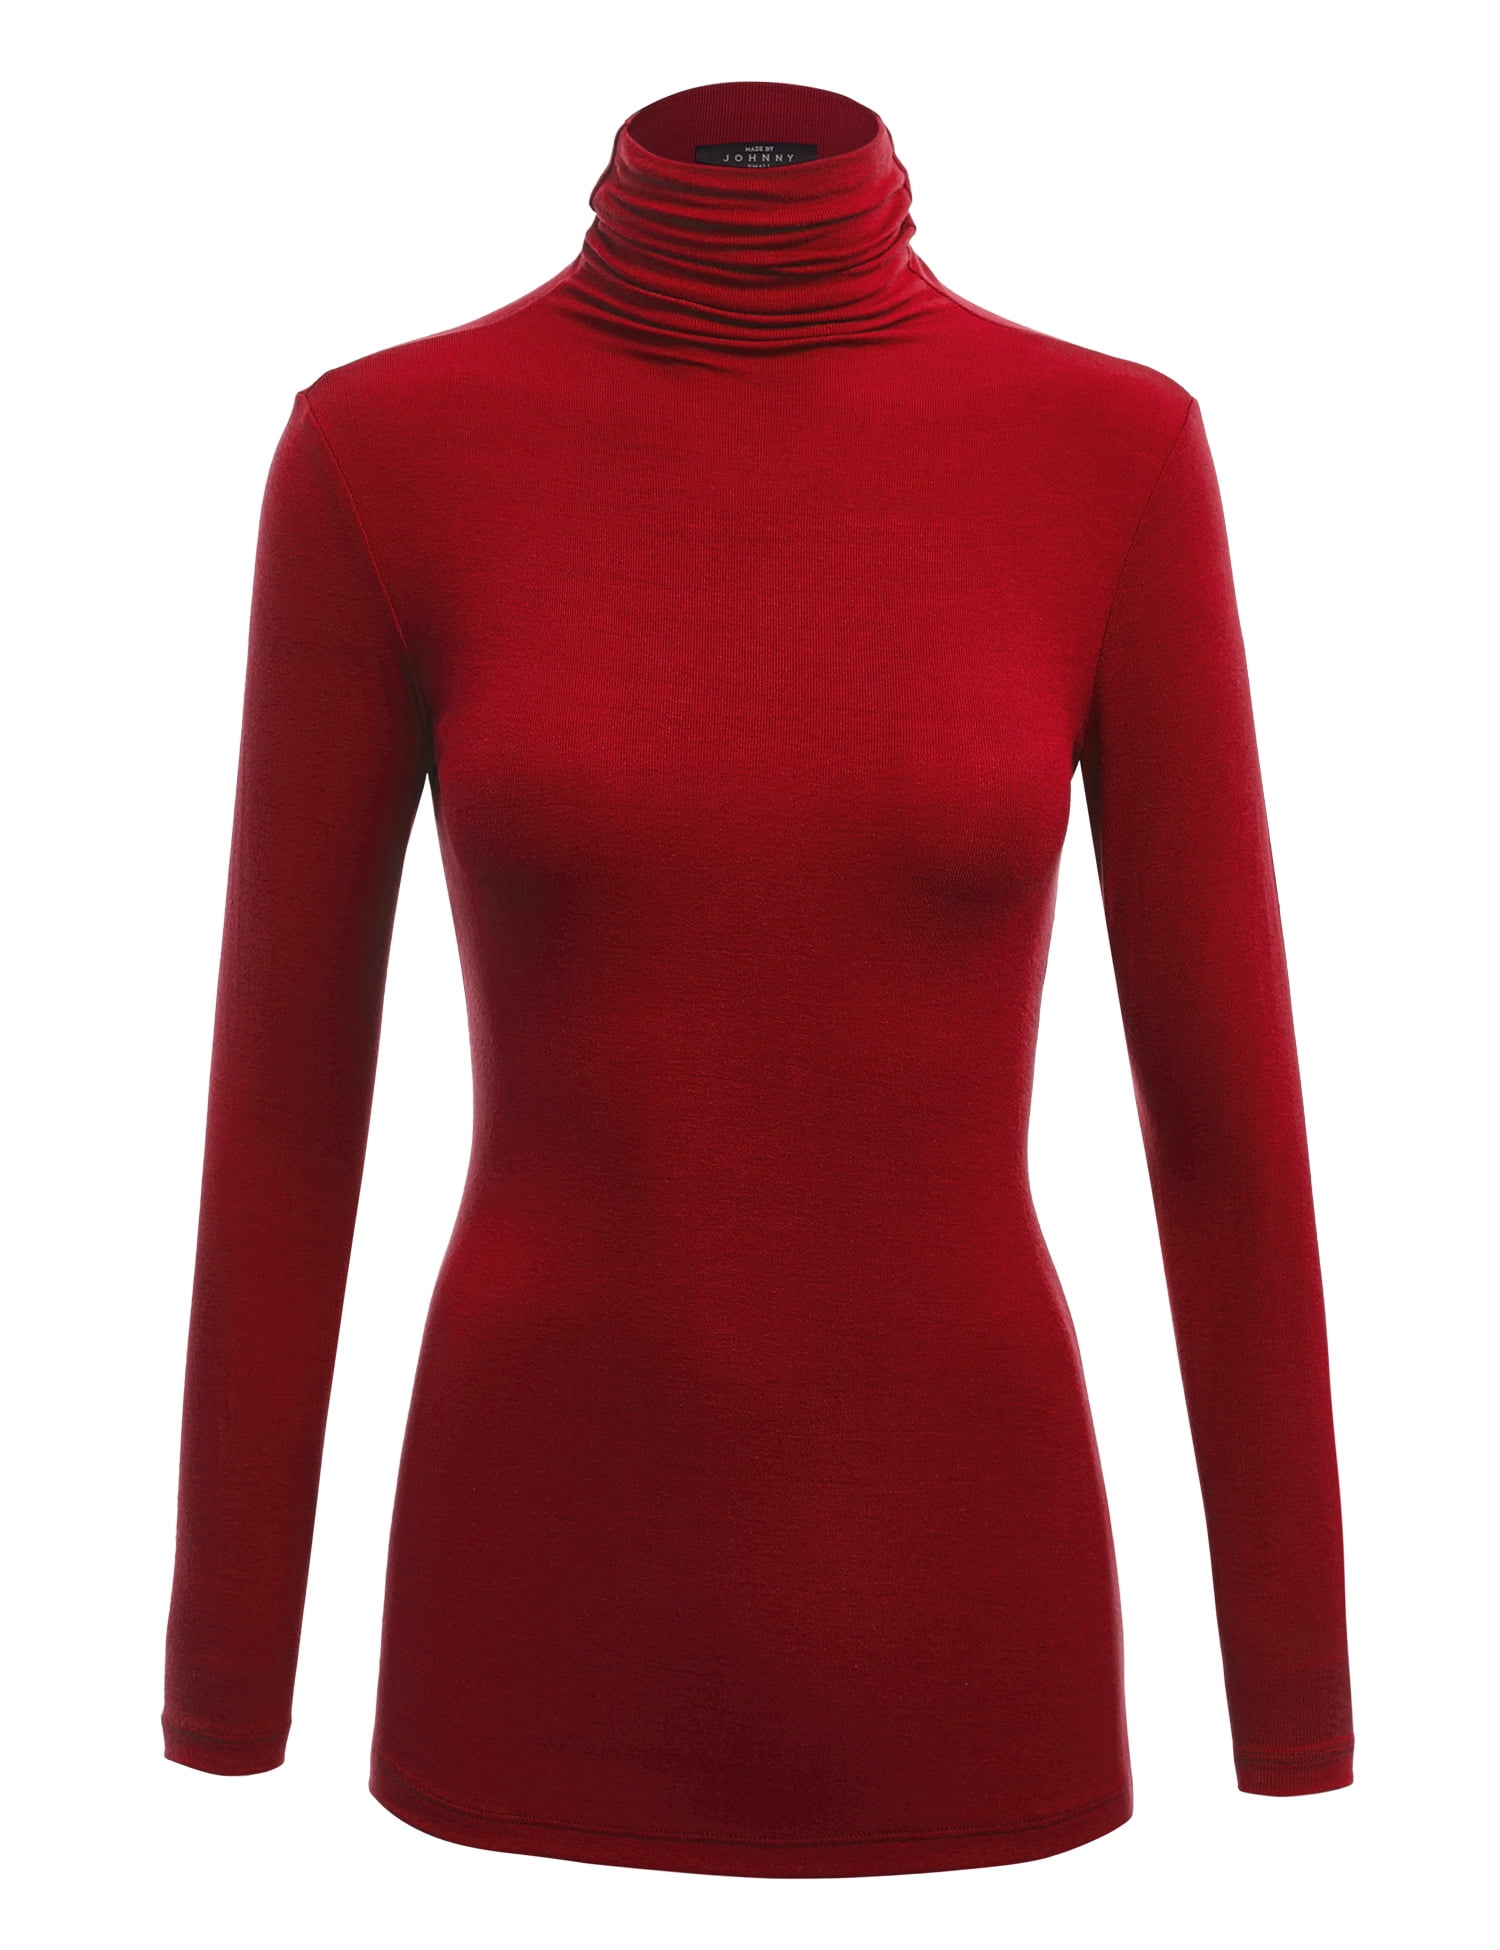 MBJ WSK1030 Womens Long Sleeve Ribbed Turtleneck Pullover Sweater XXXL ...